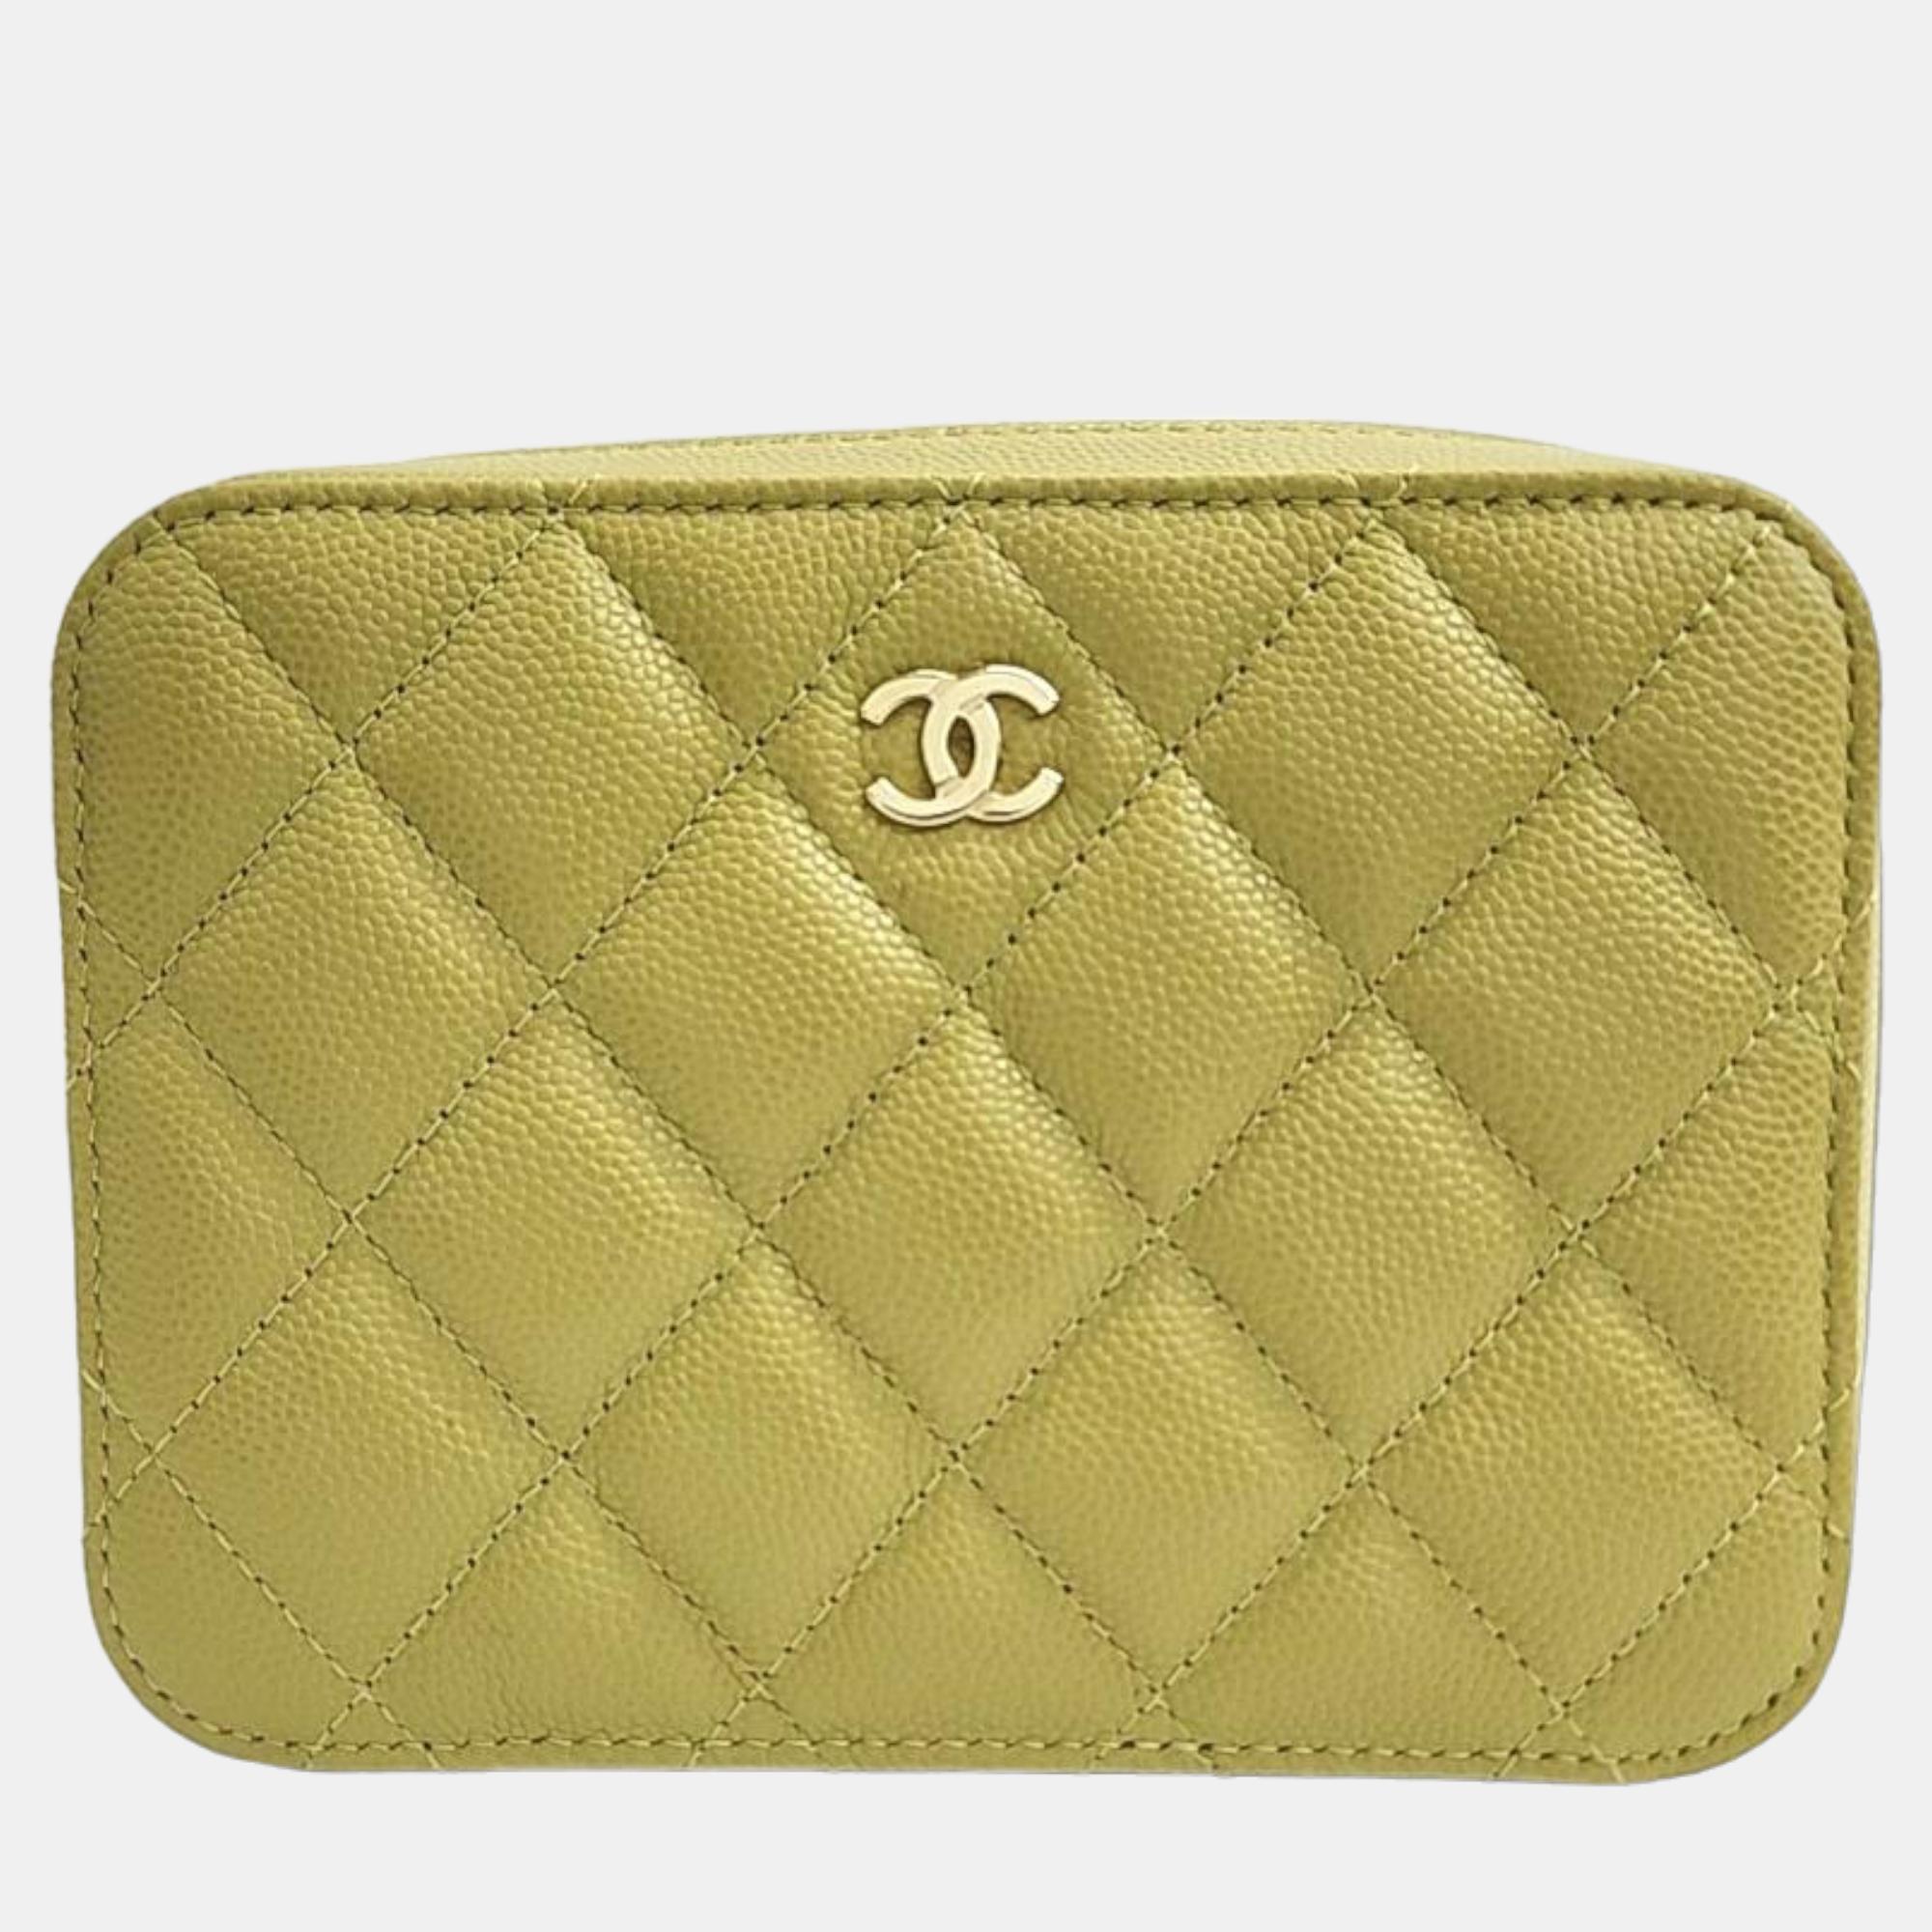 Chanel green leather caviar camera shoulder bag